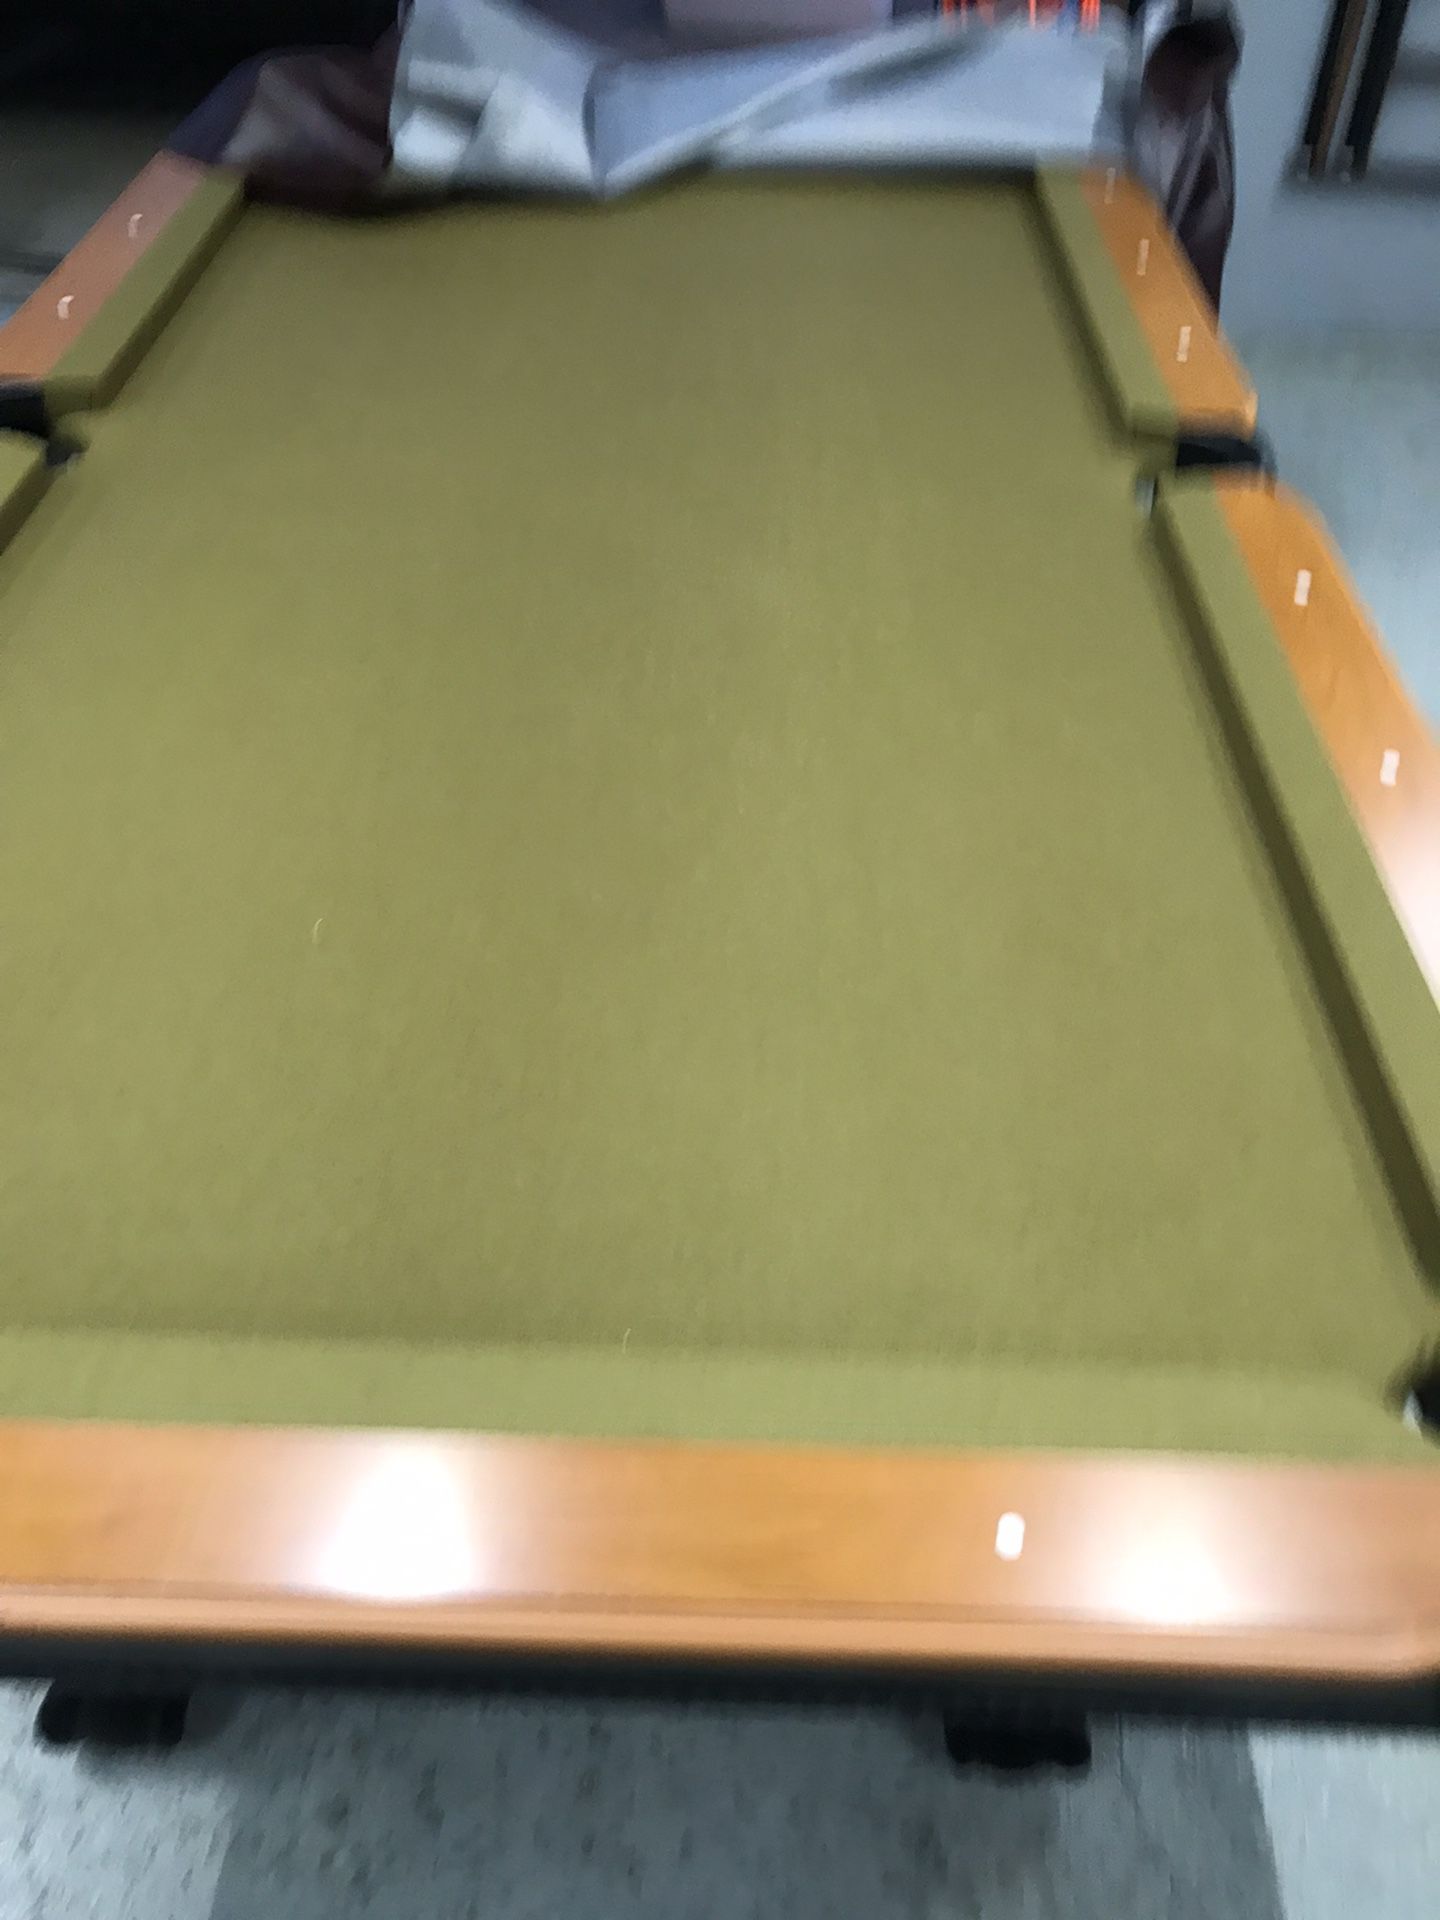 Sportcraft Pool Table 